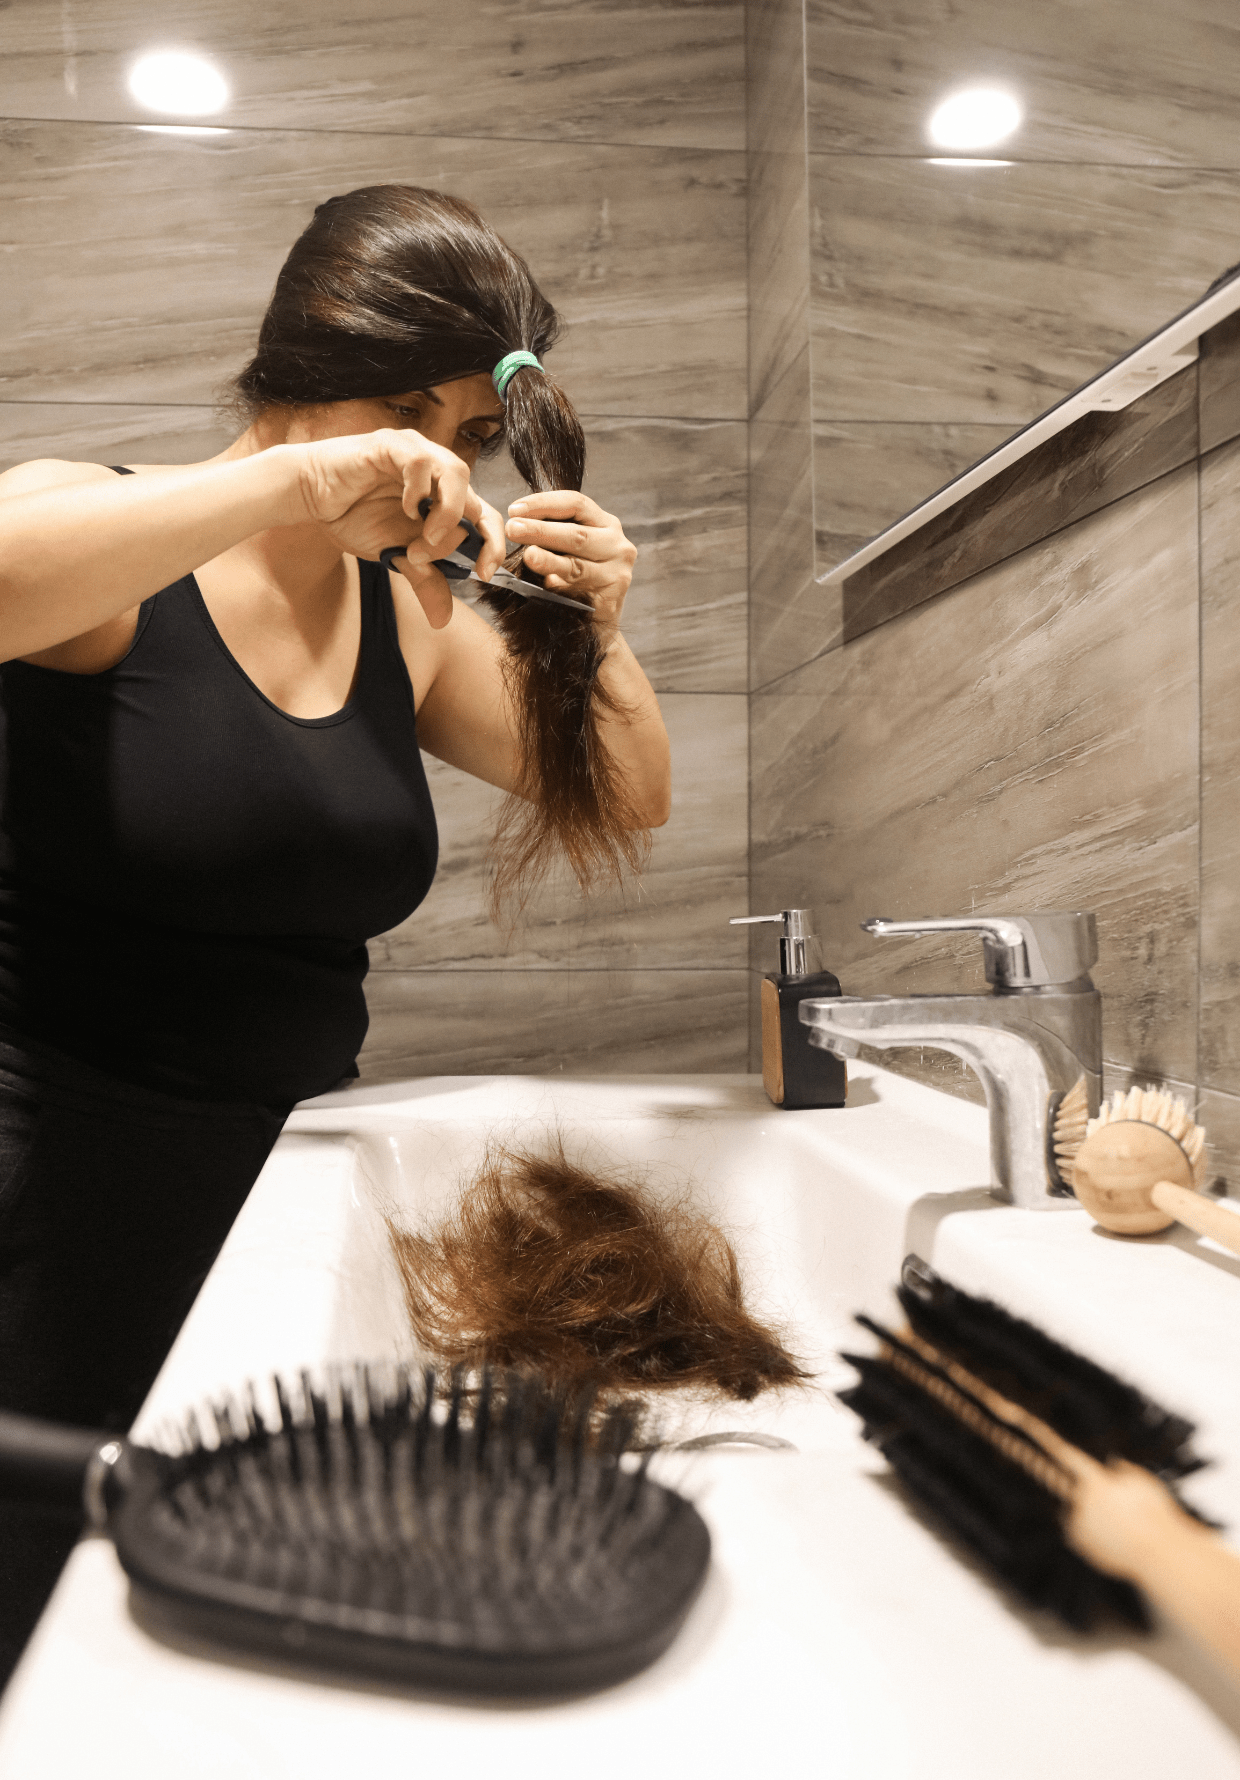 Como cortar os cabelos sozinha